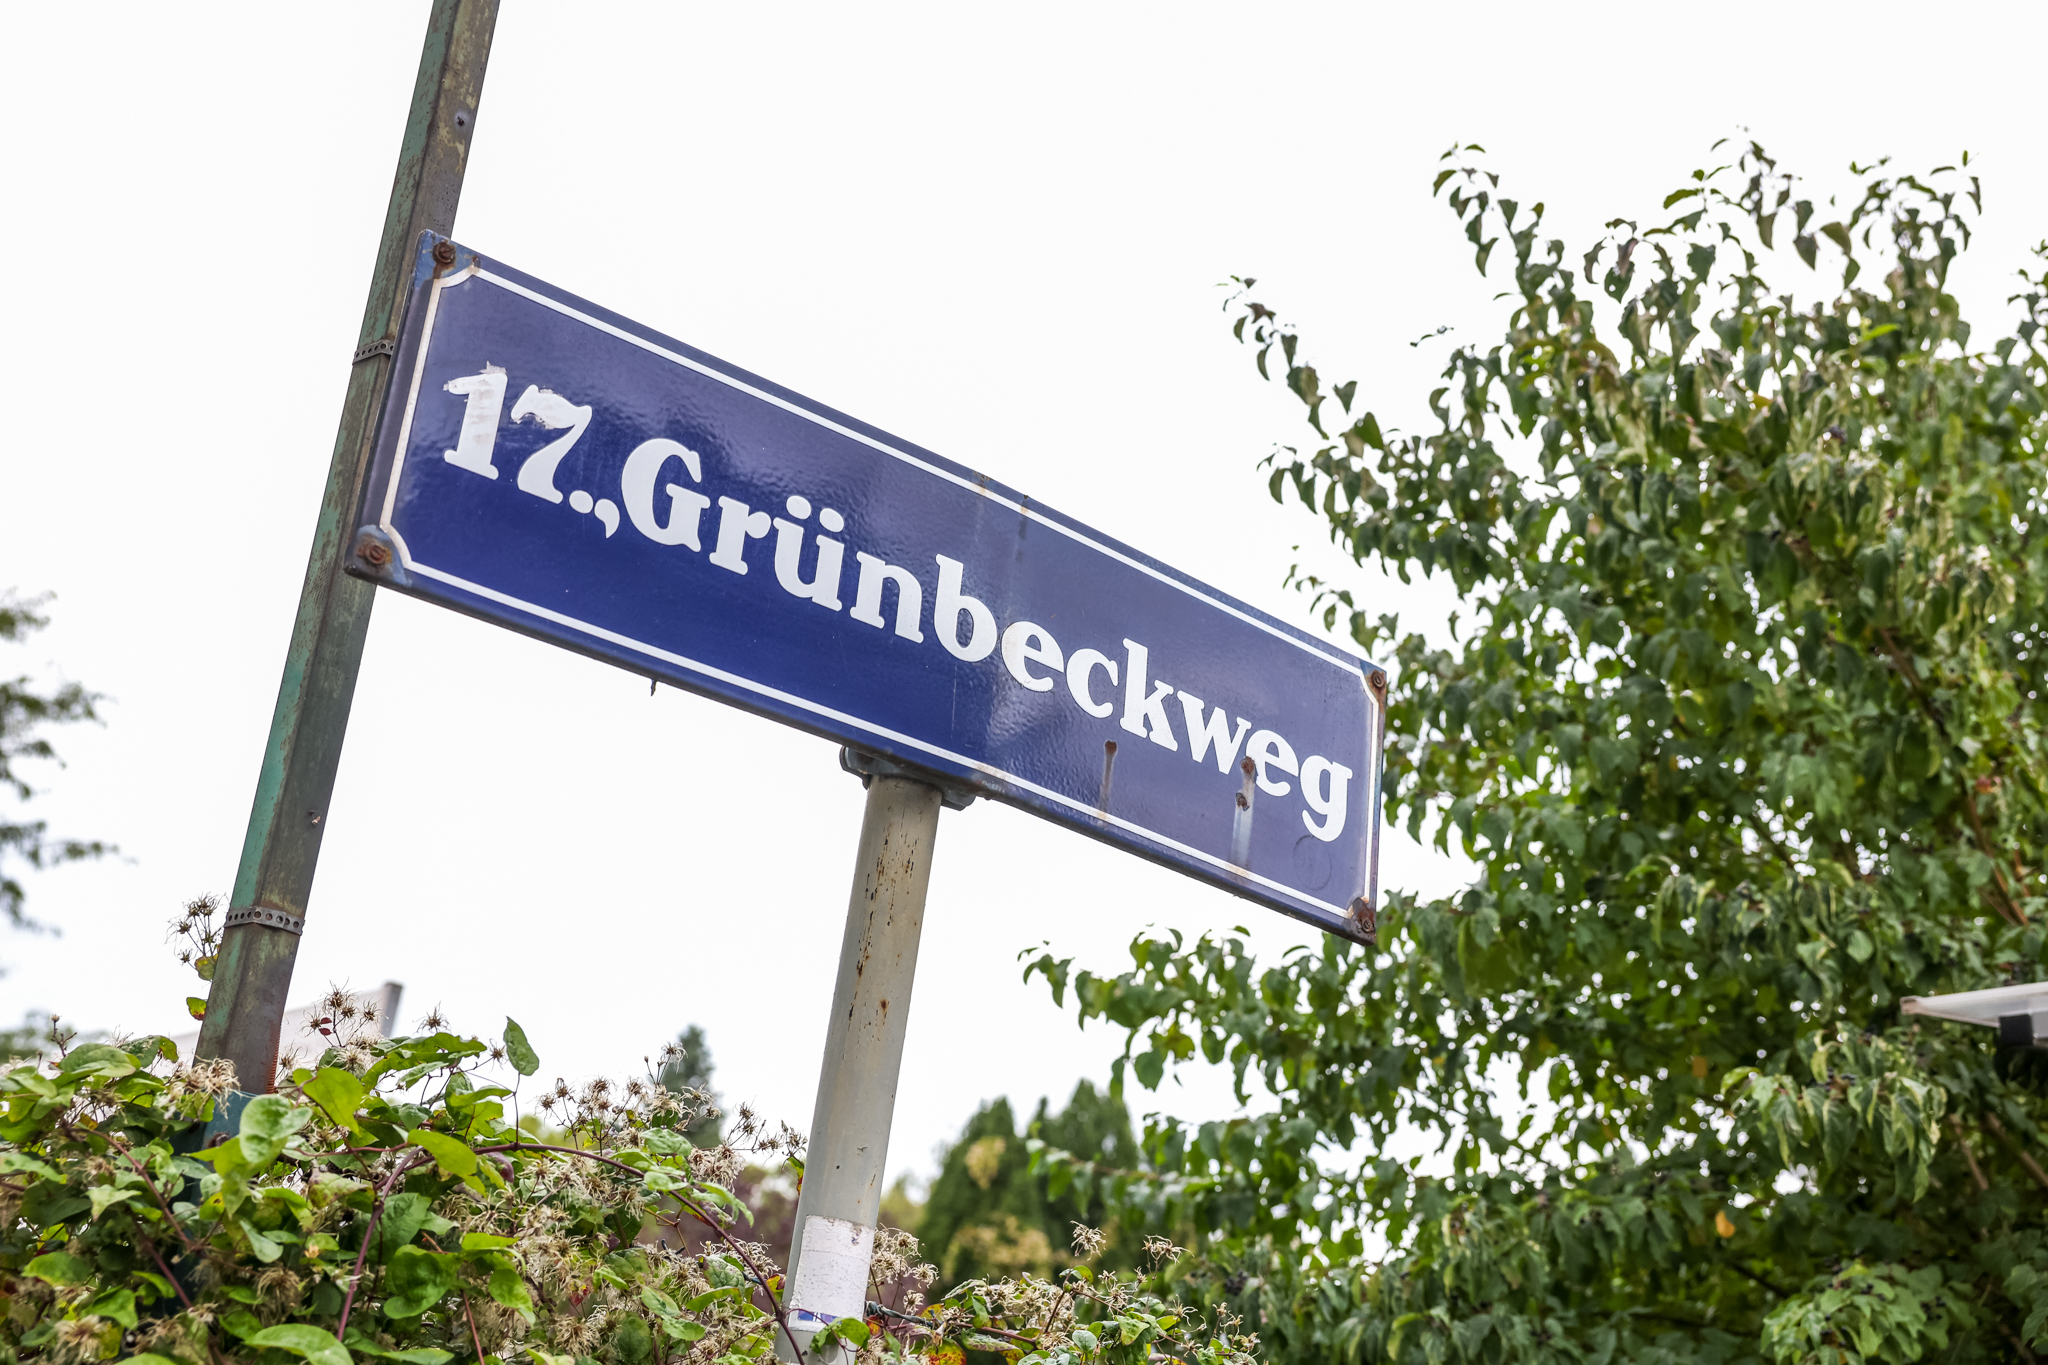 Straßenschild "Grünbeckweg"